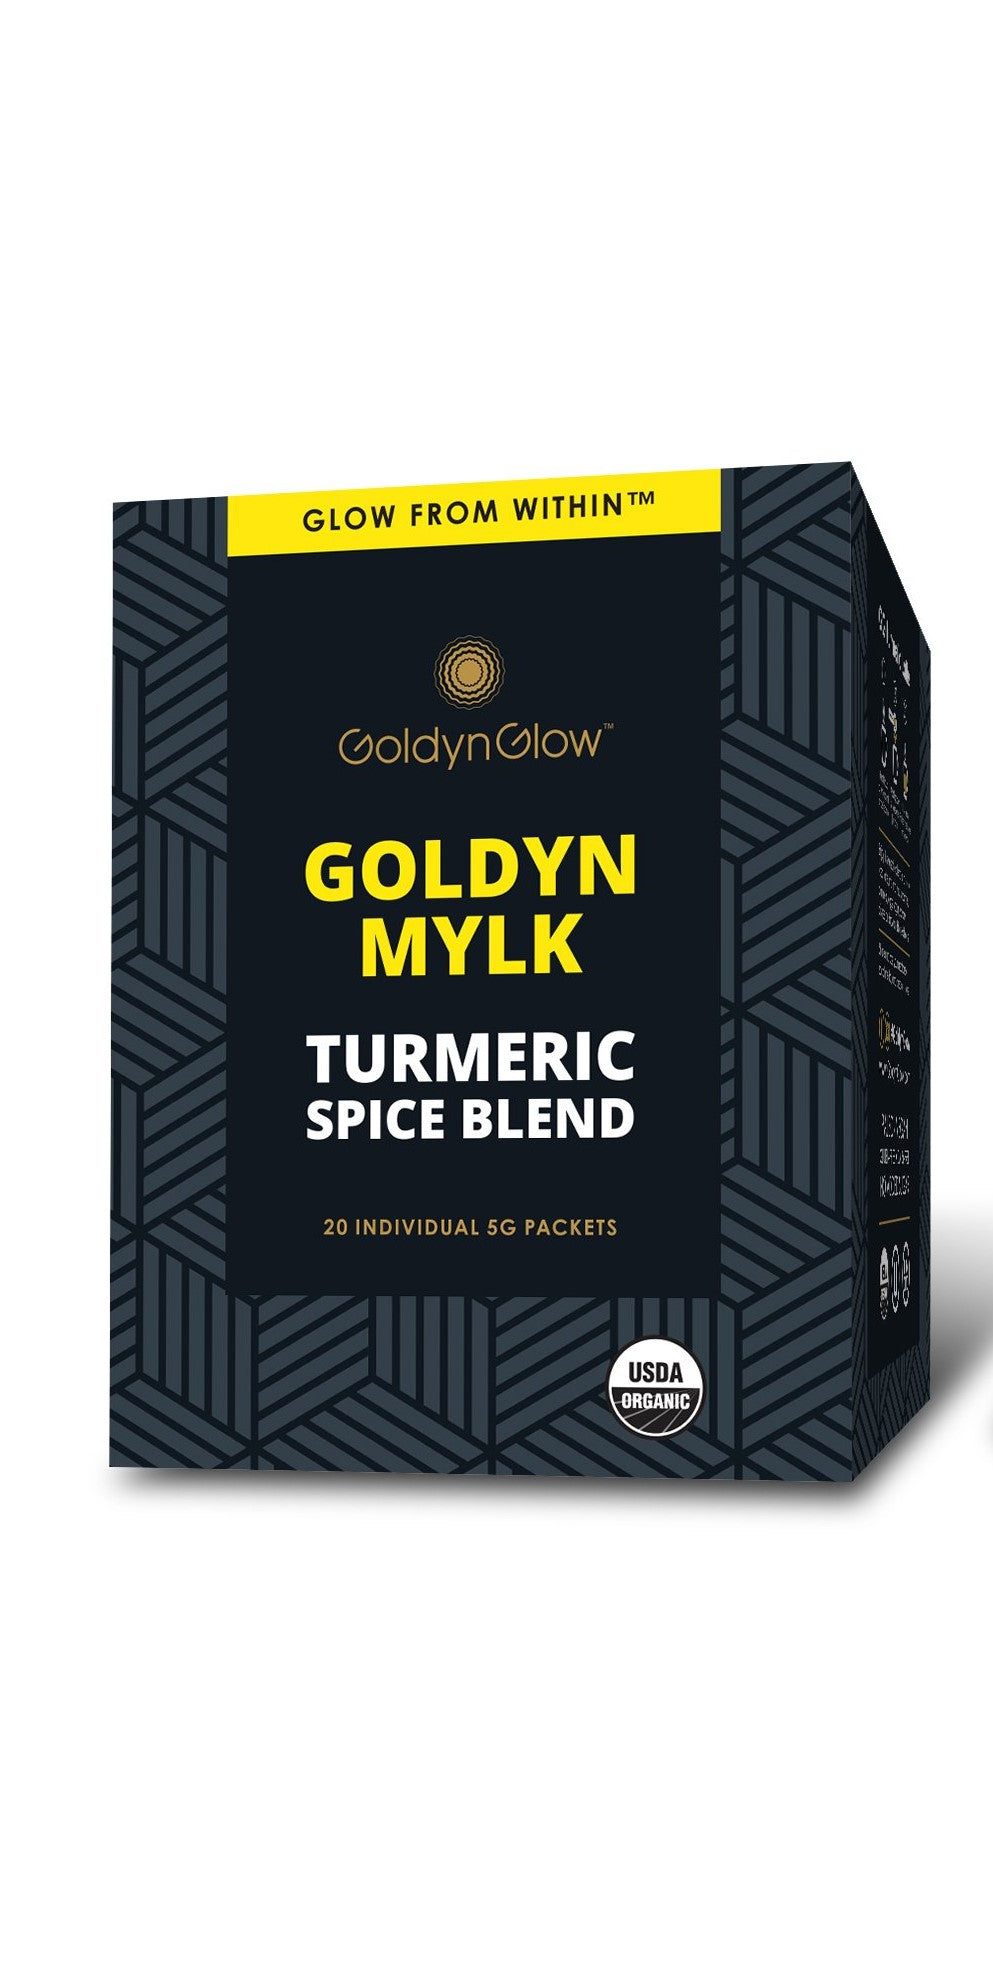 Goldyn Glow, Goldyn Mylk, Tumeric Spice Blend, 20 pkt